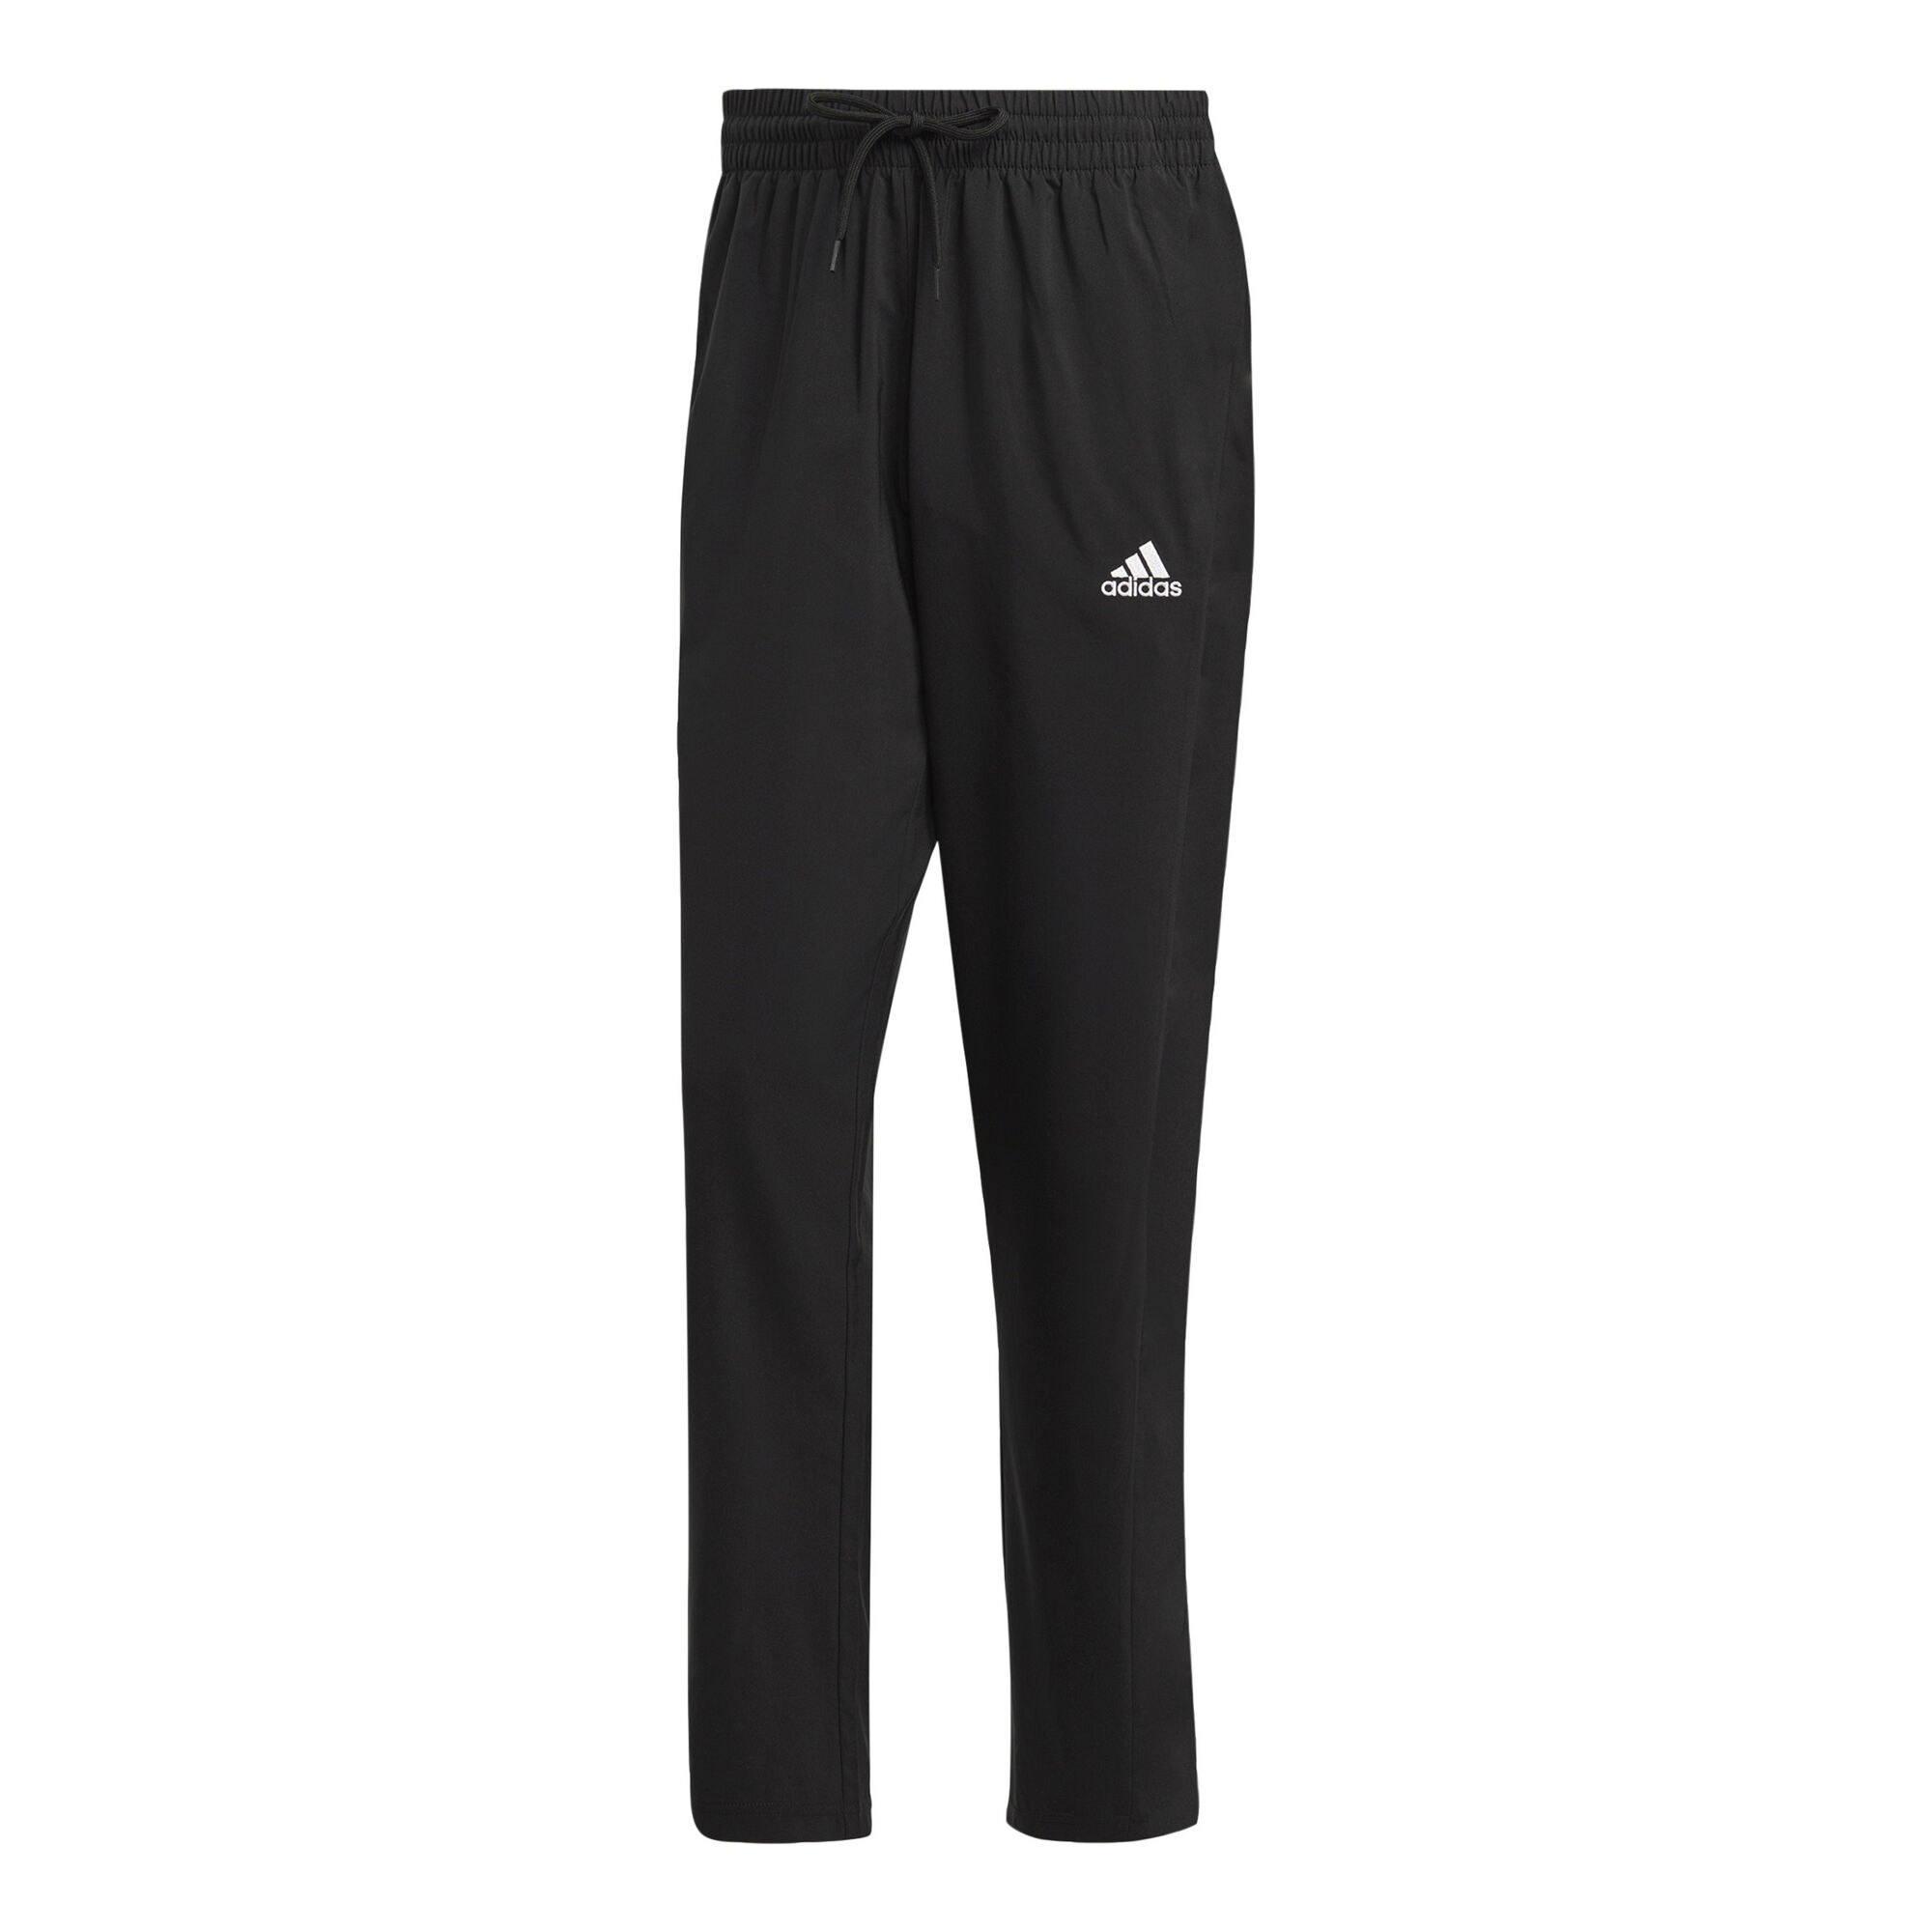 adidas Comfort Flex Cotton 3-Stripes Briefs (3 pairs) - Black